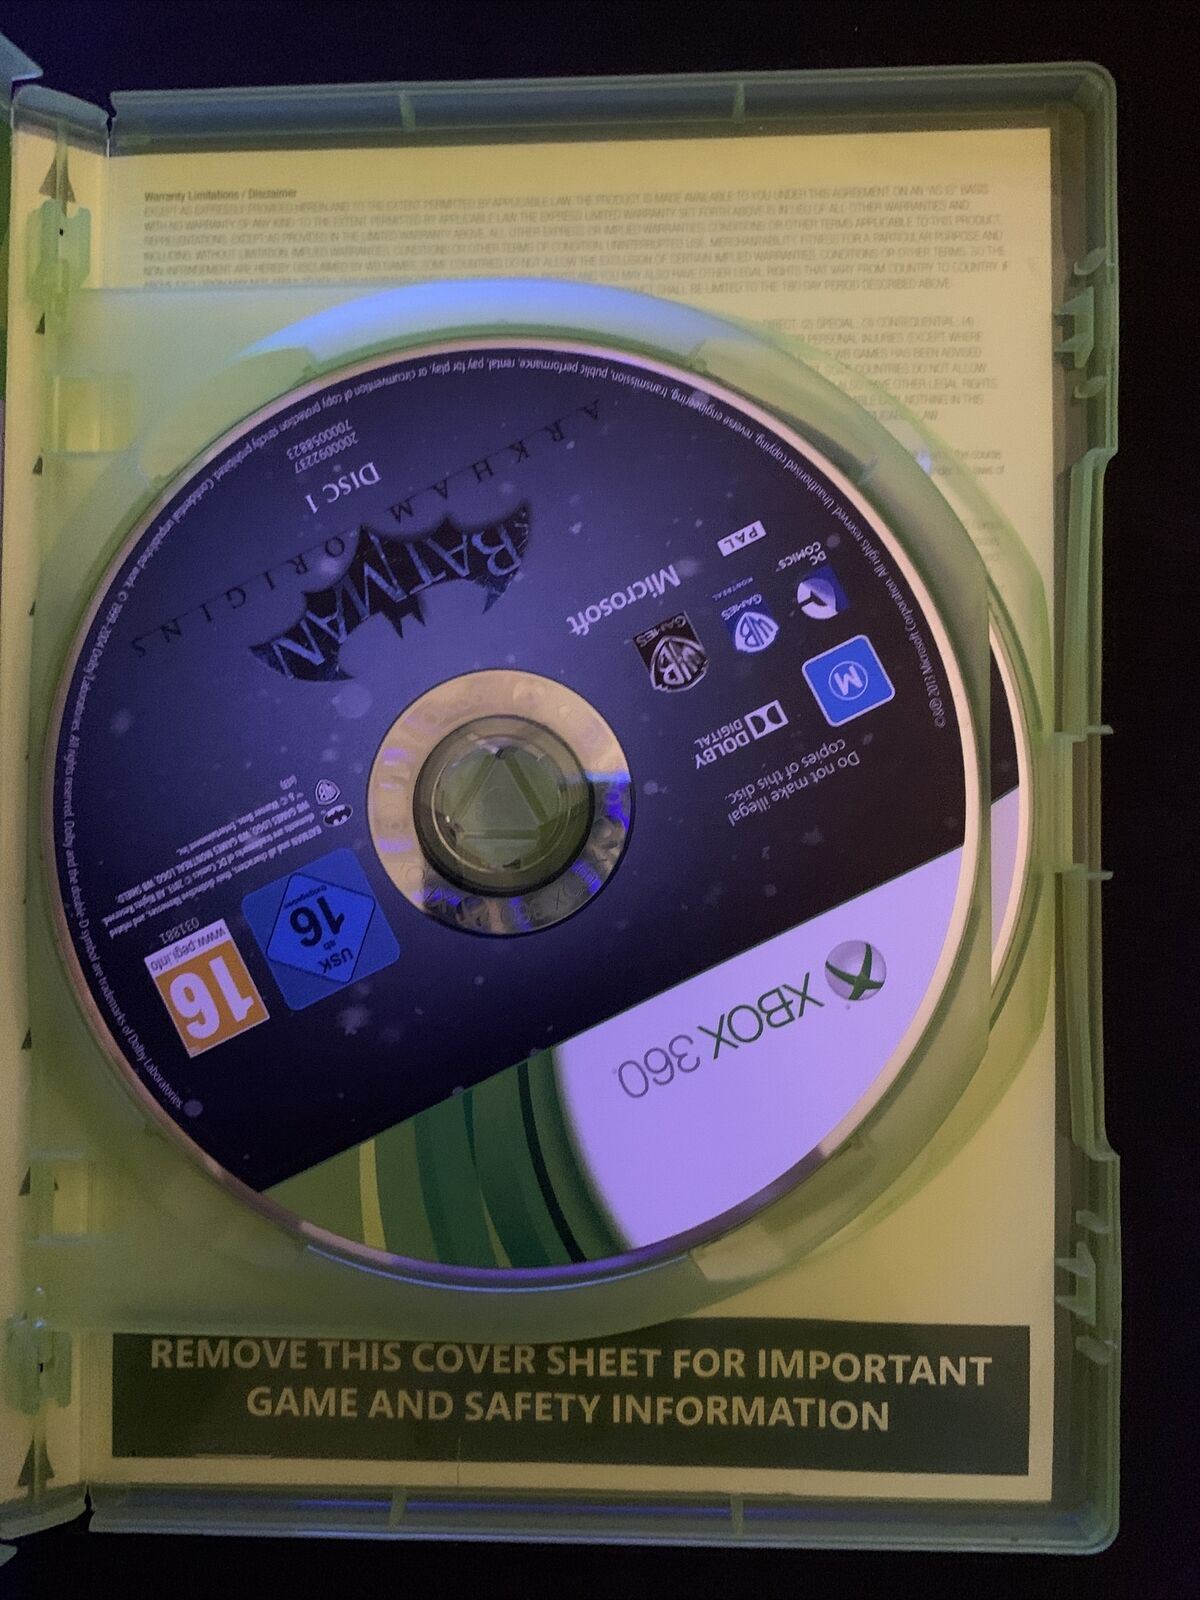 Batman Arkham Origins - Microsoft Xbox 360 Game PAL